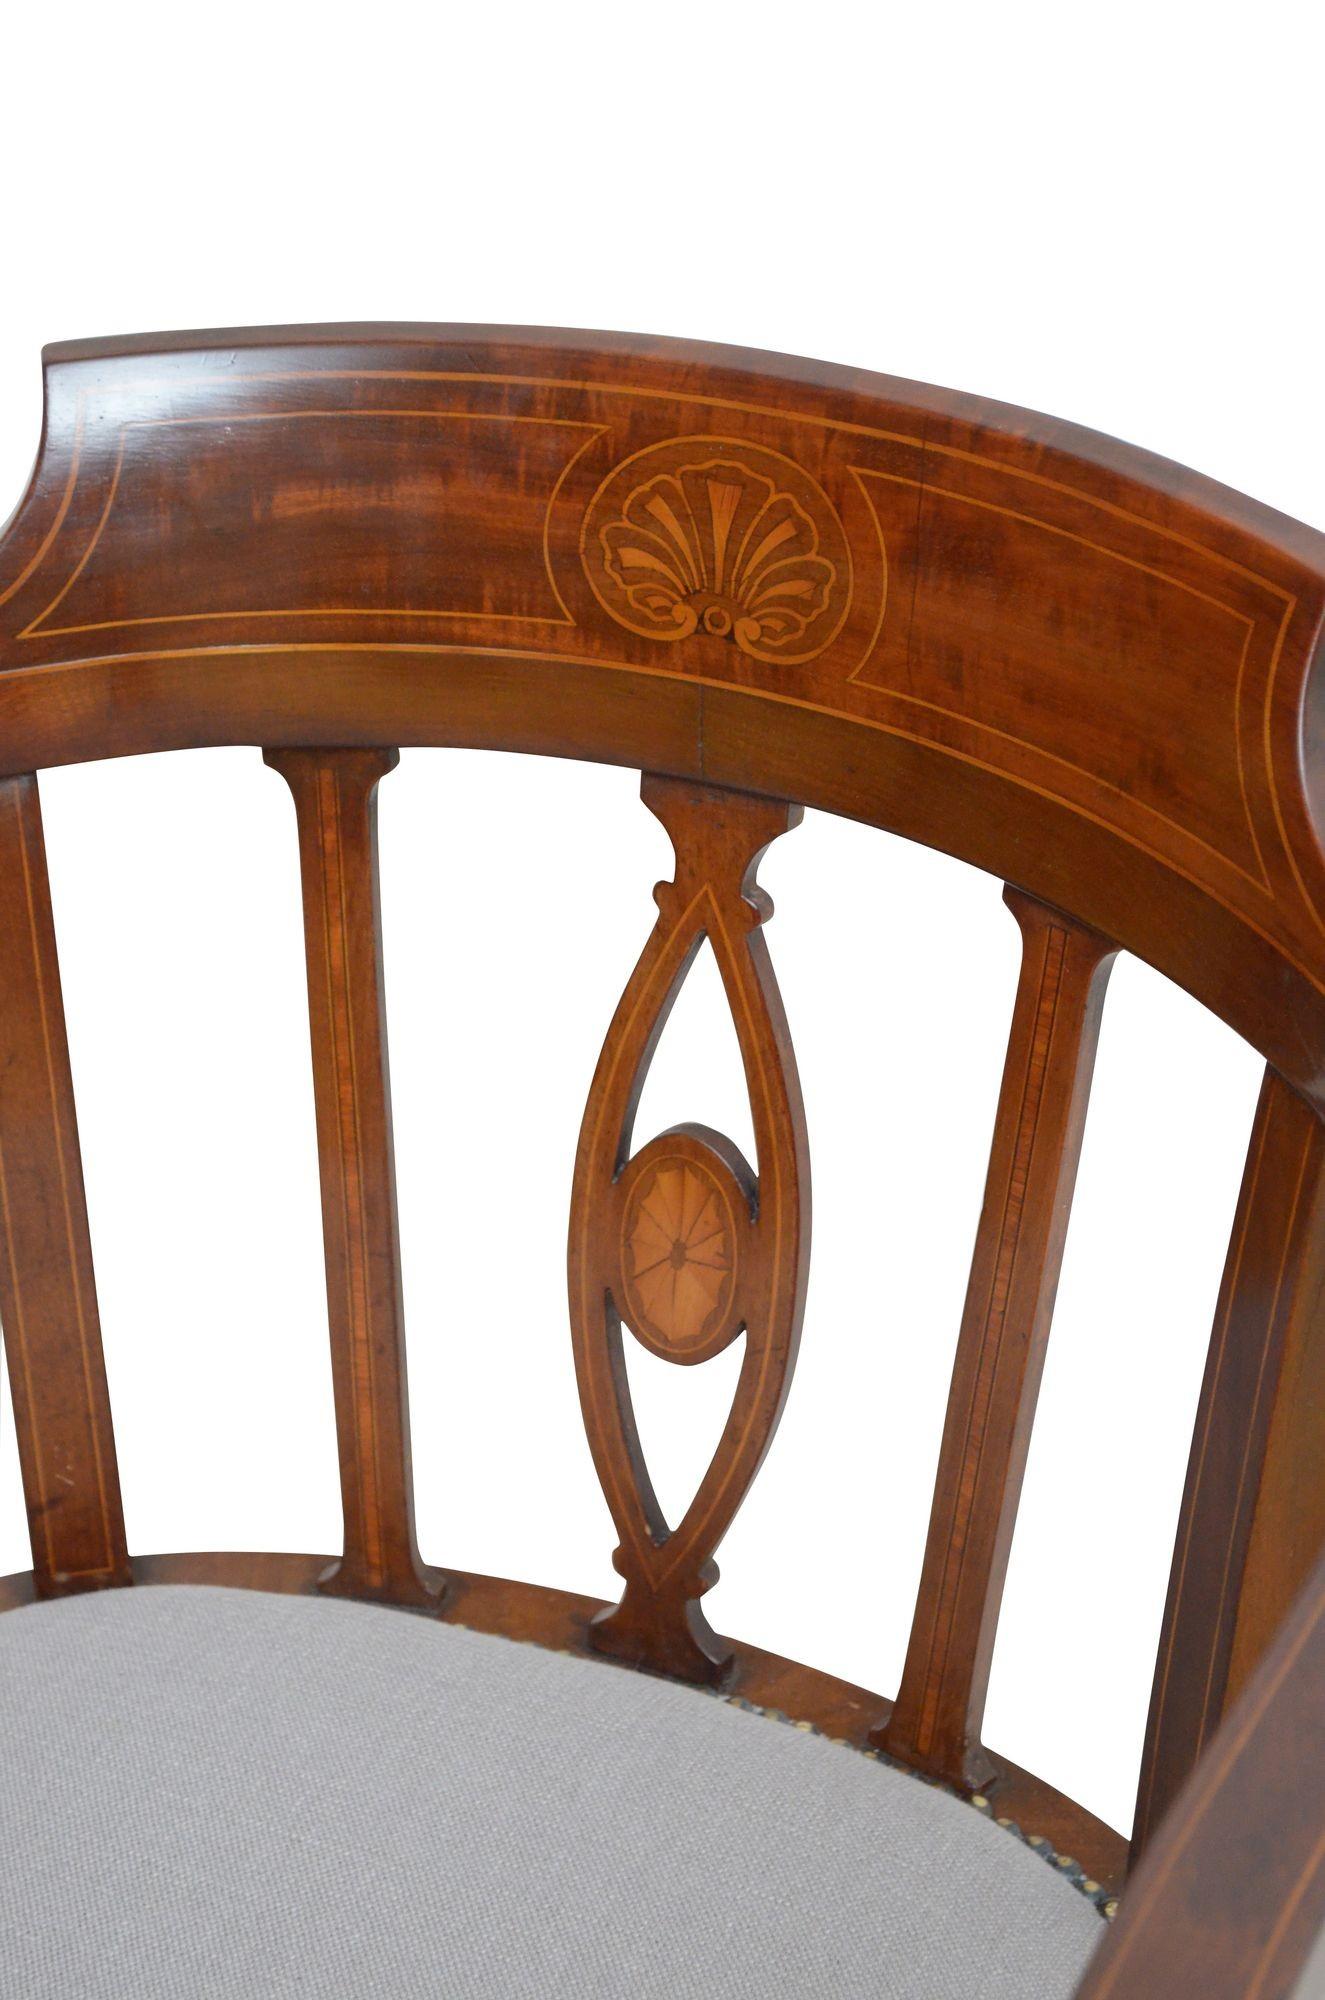 Fine English Edwardian Revolving Desk Chair For Sale 3